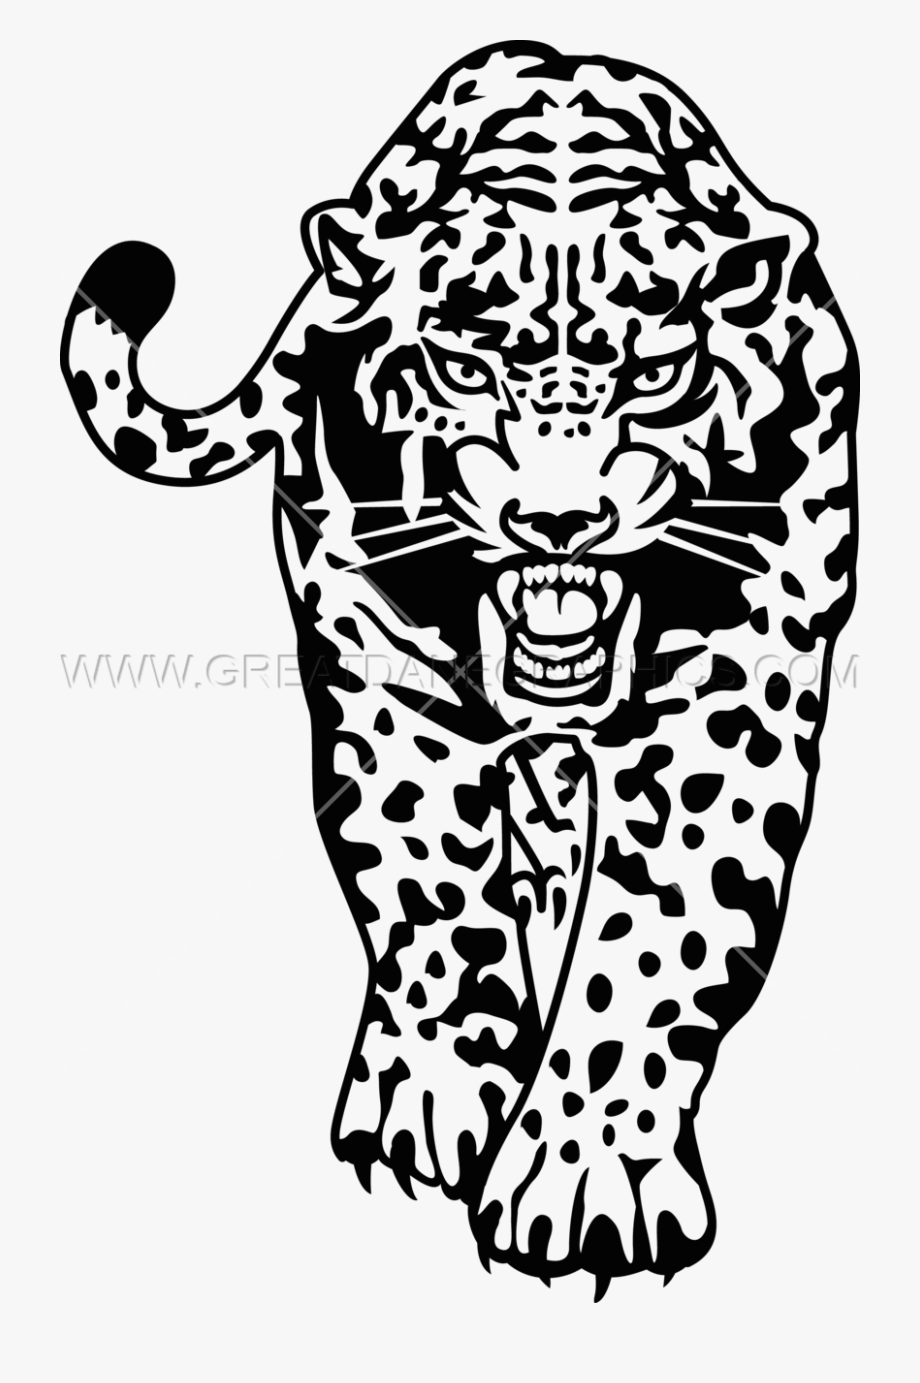 jaguar clipart walking